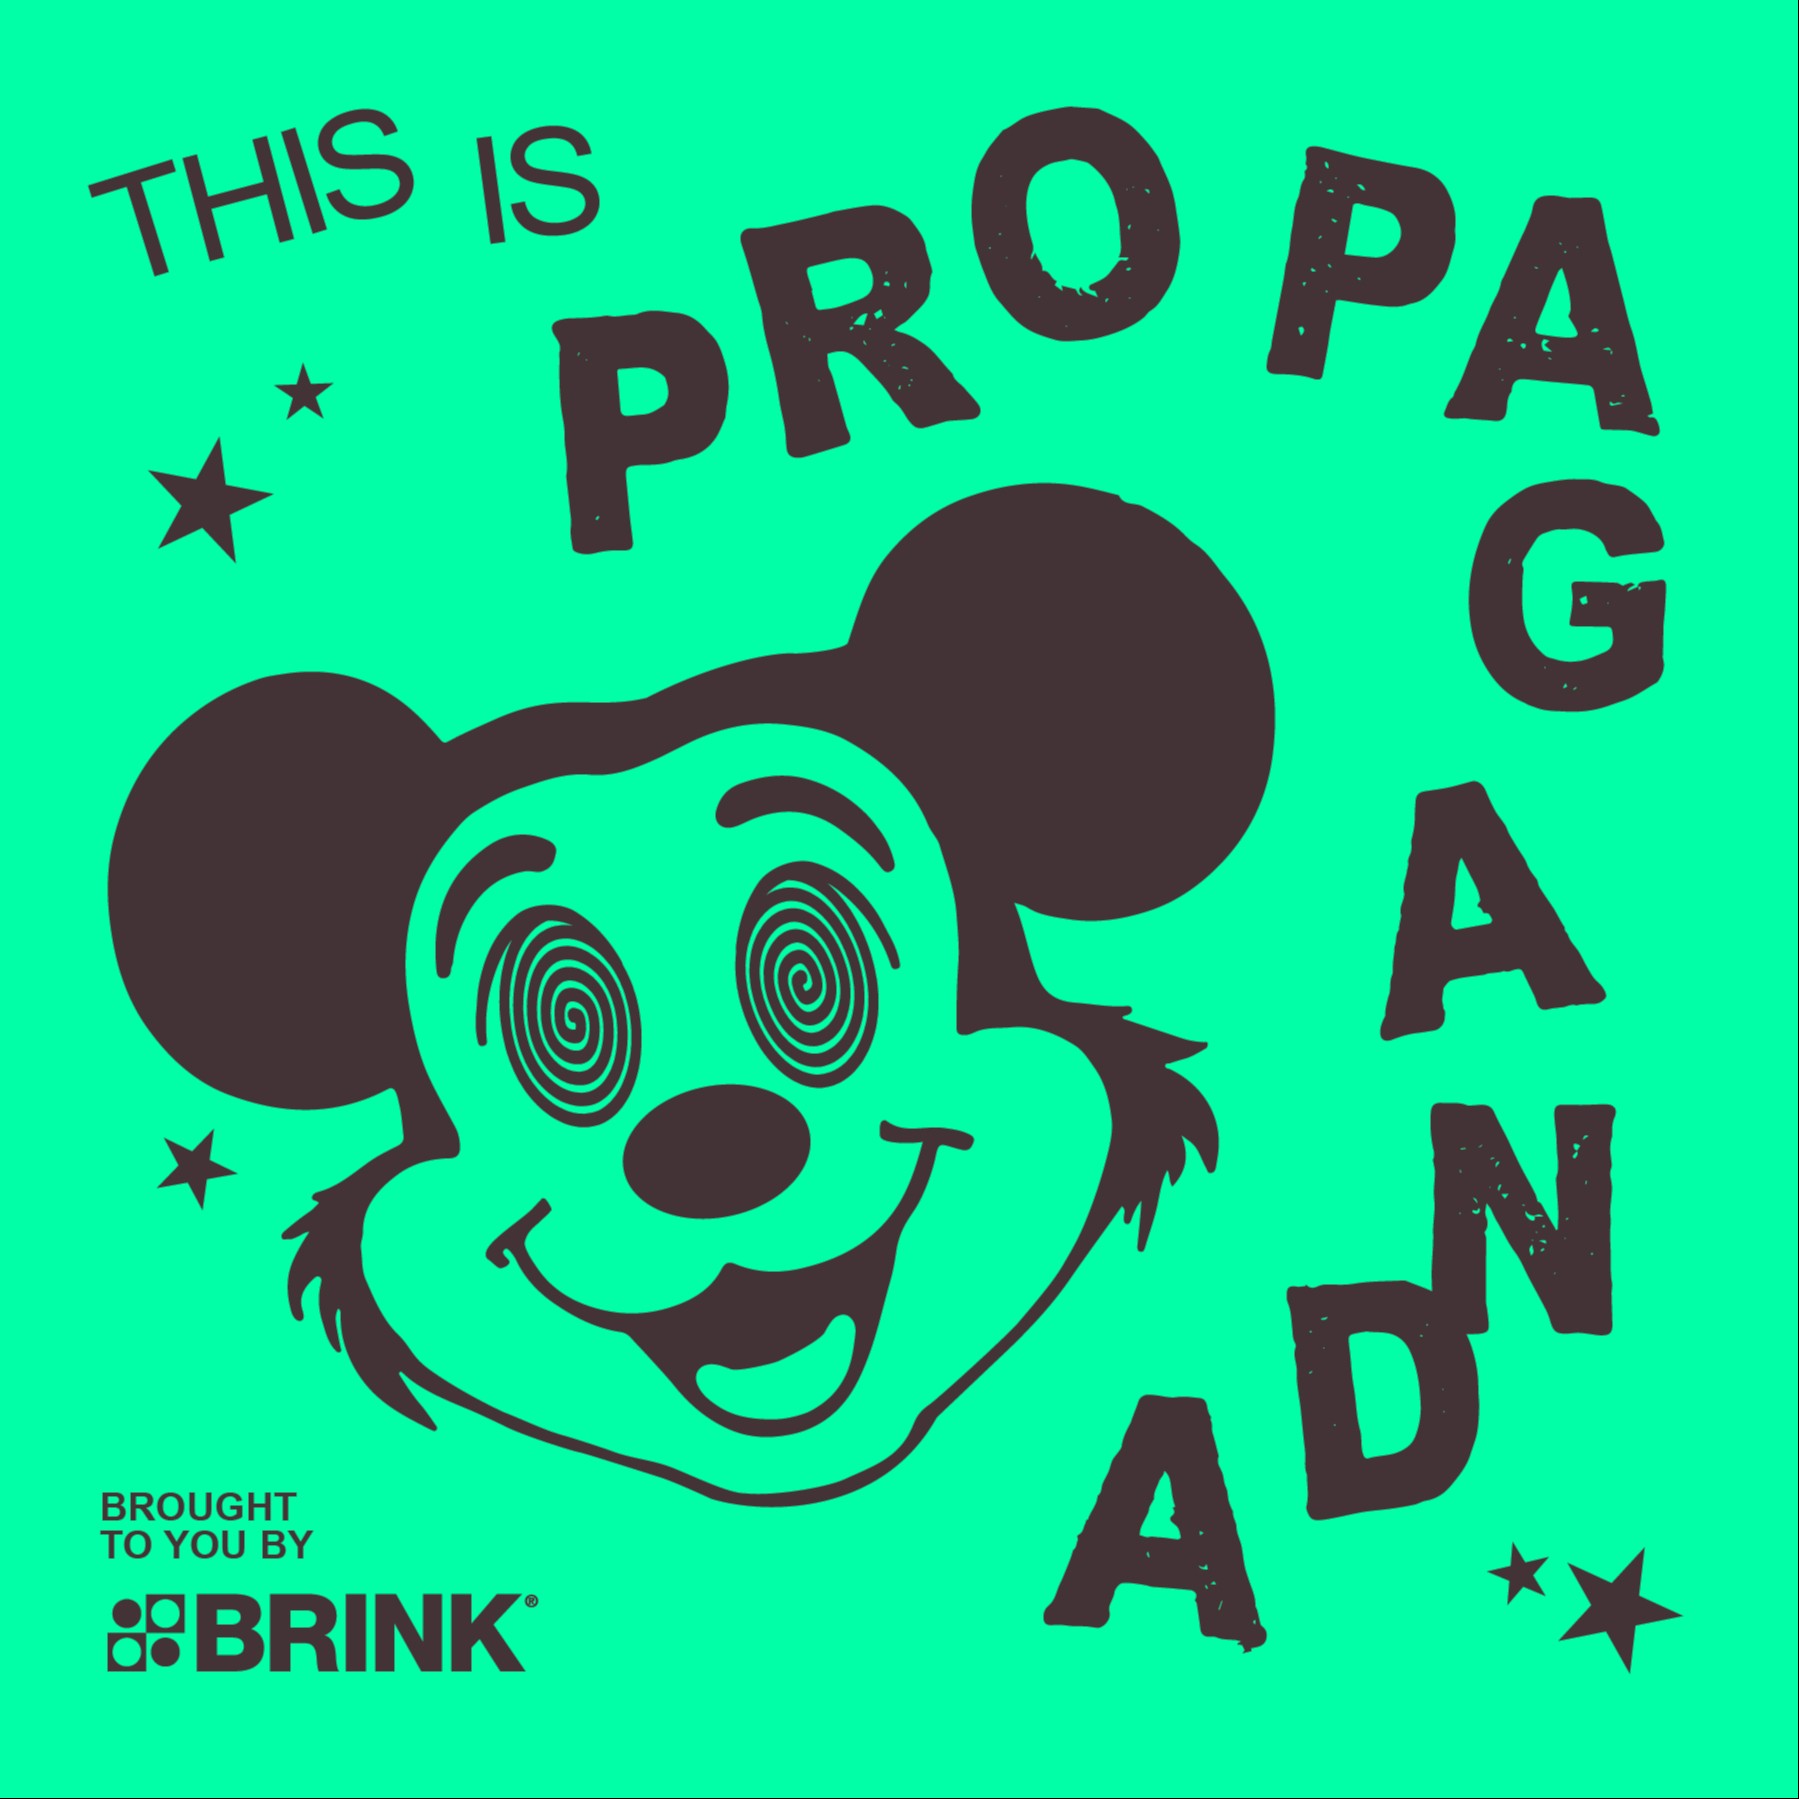 This Is Propaganda